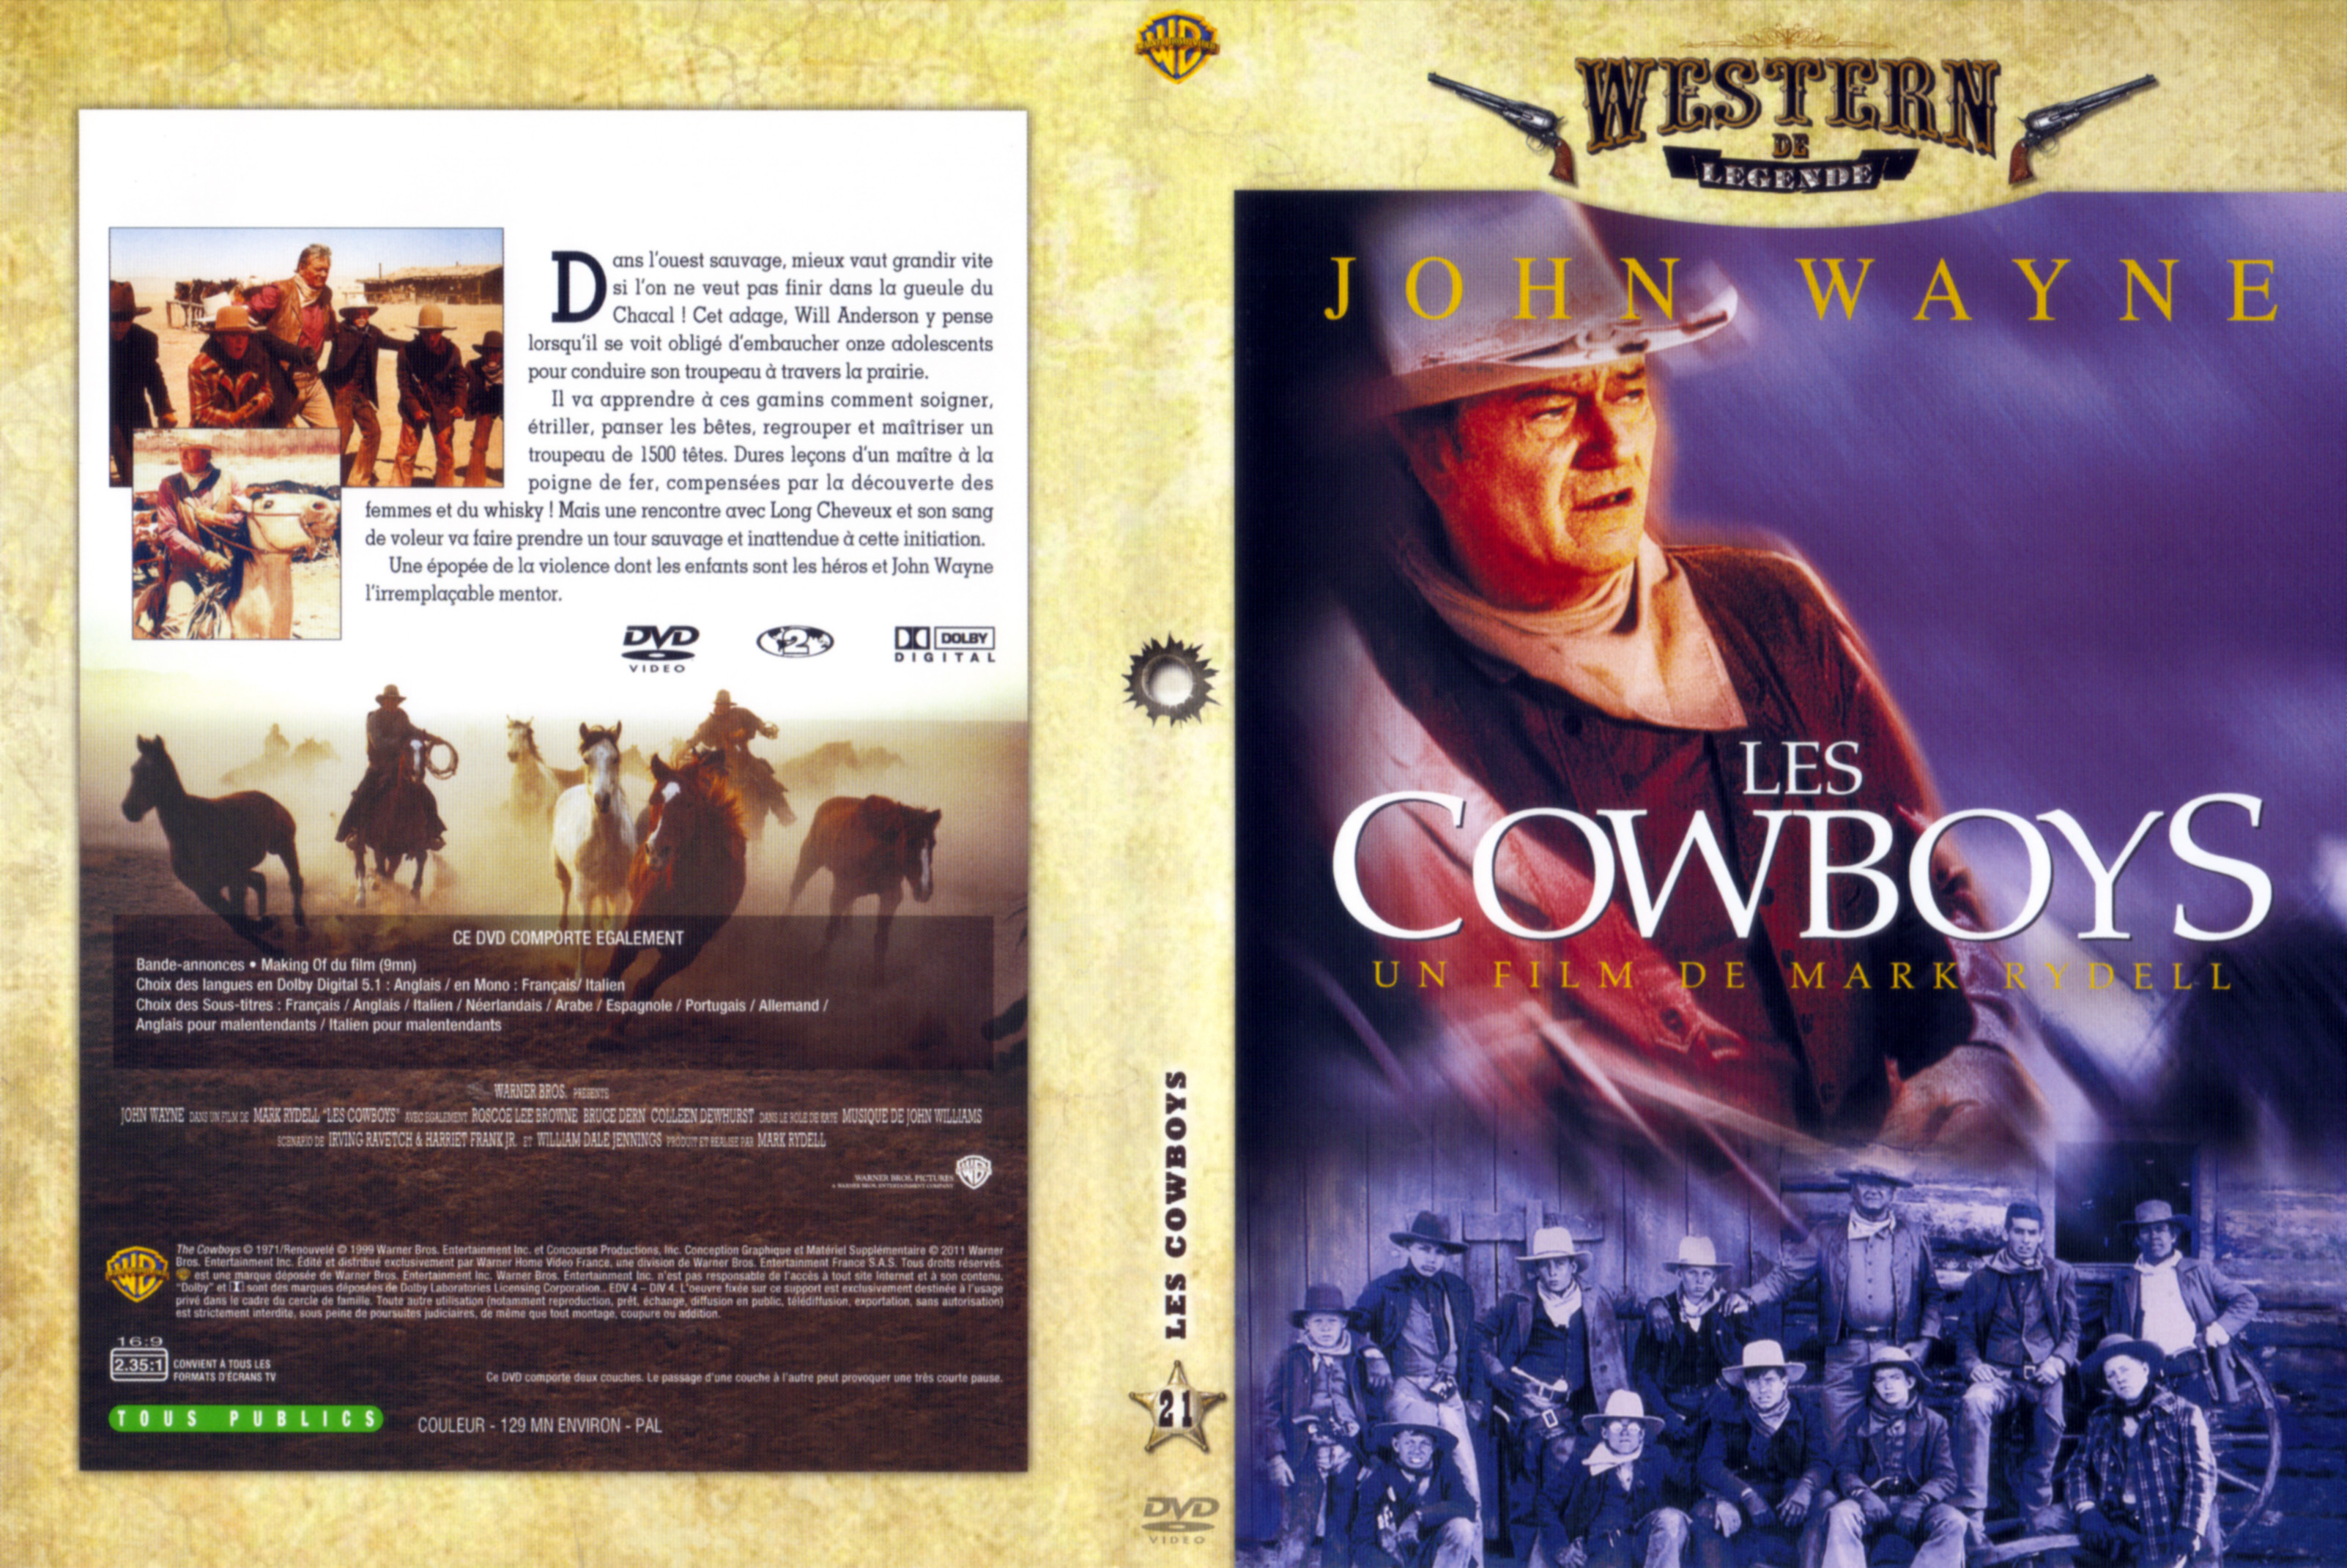 Jaquette DVD Les cowboys v2